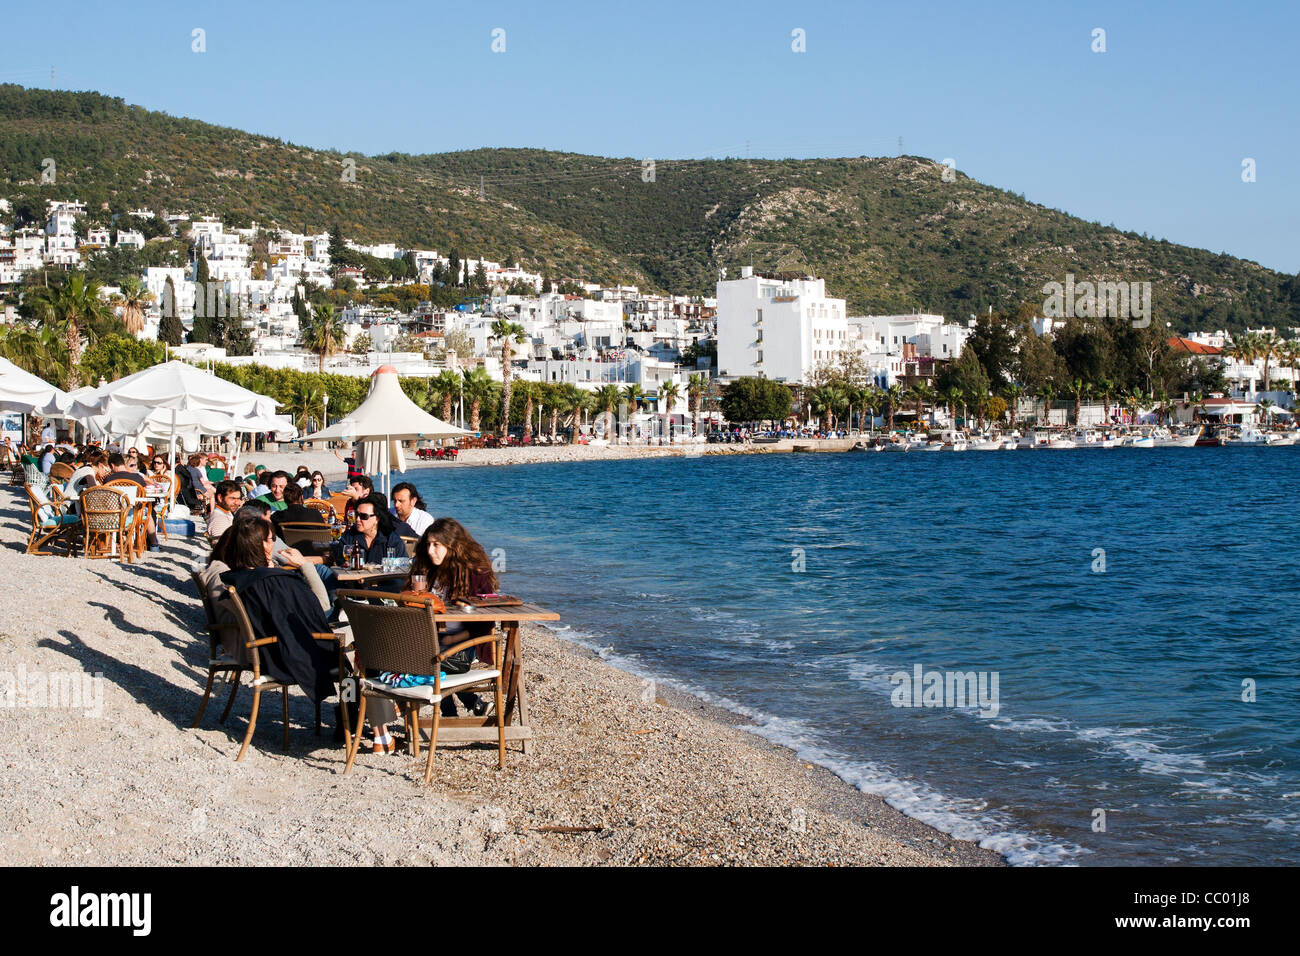 CAFÉS AND RESTAURANTS ON THE BEACH, TOWN CENTER OF BODRUM, AEGEAN COAST, TURKEY Stock Photo